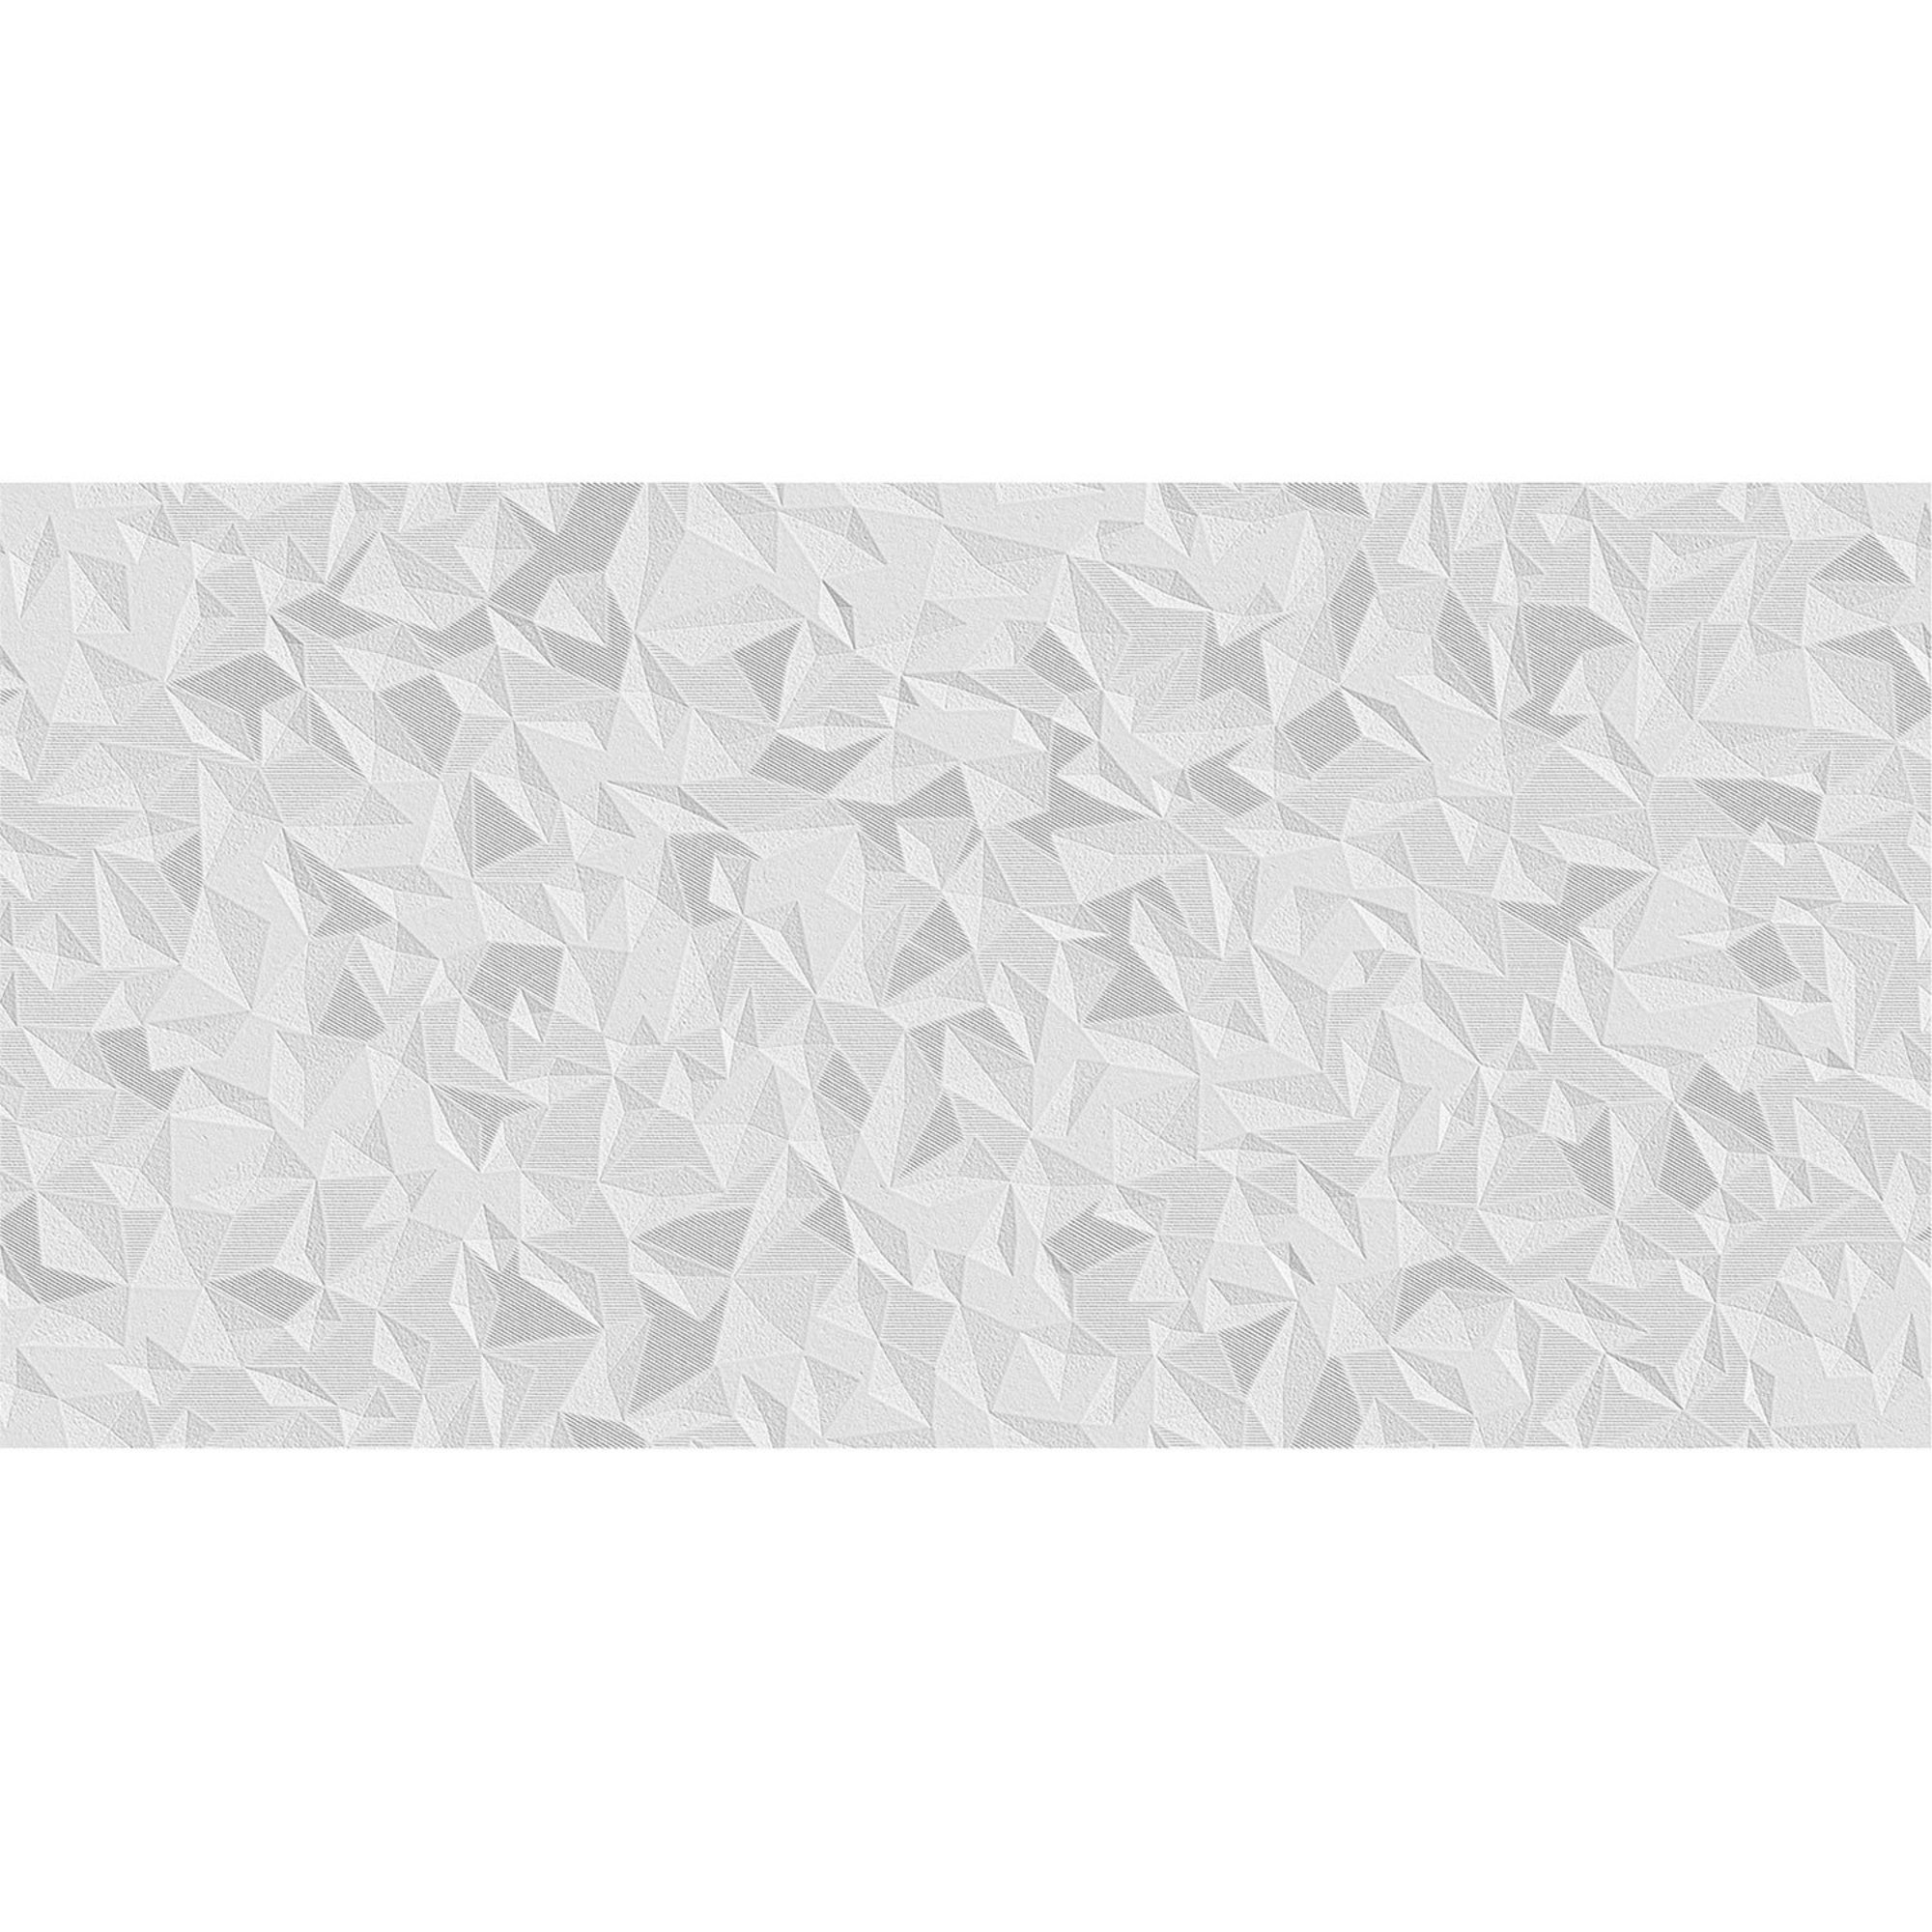 Lily White Textured Decor Tile